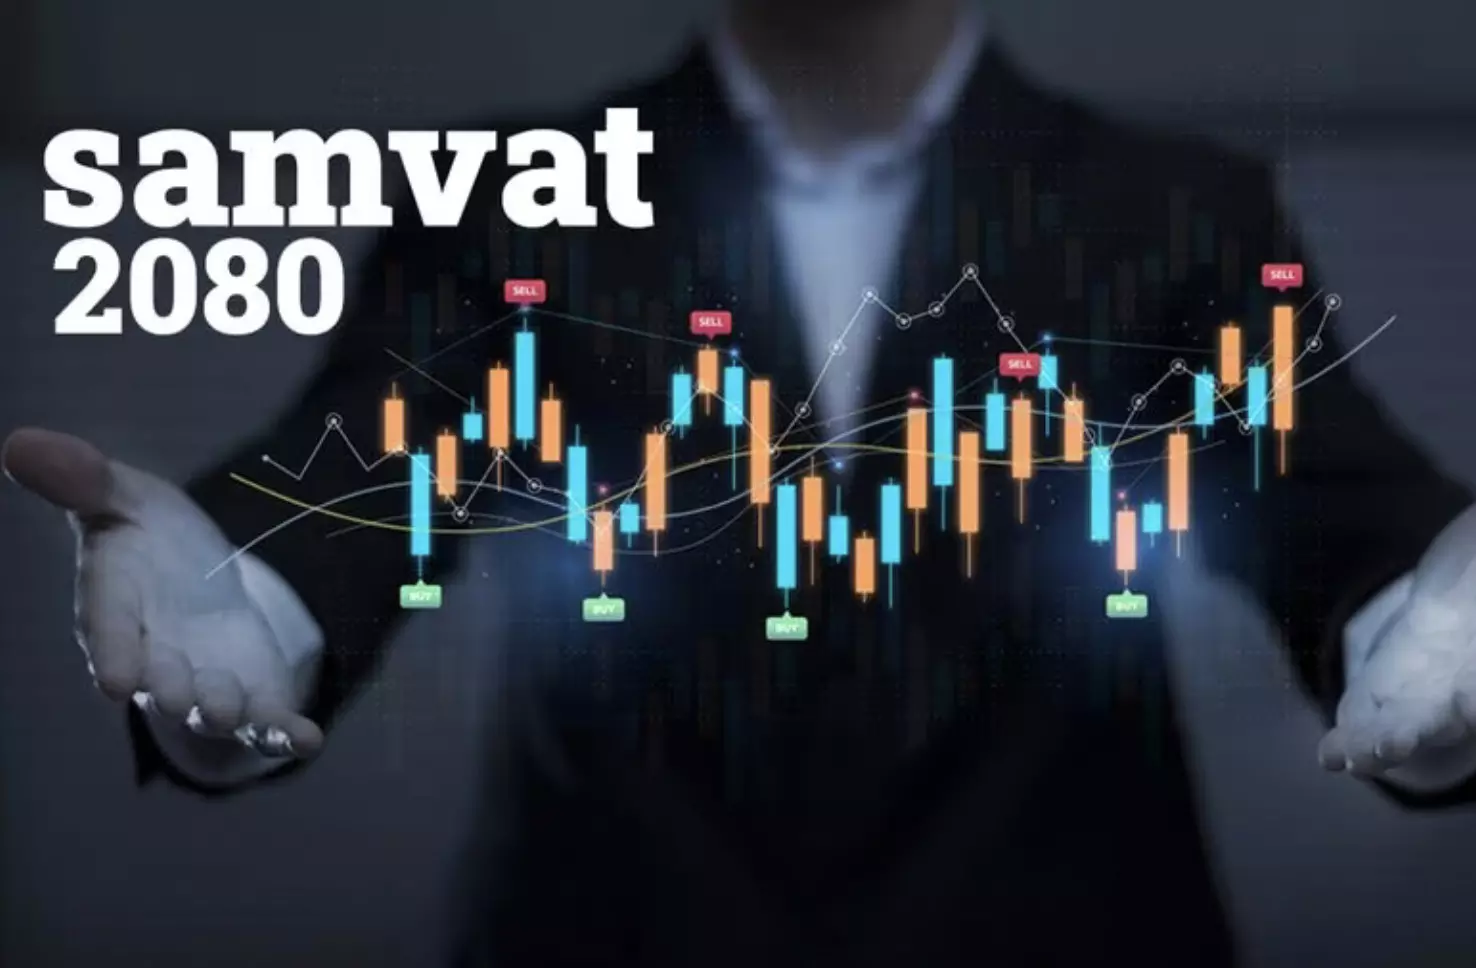 Samvat 2080: RIL, HDFC Bank, L&T among top stock picks for the next 12 months